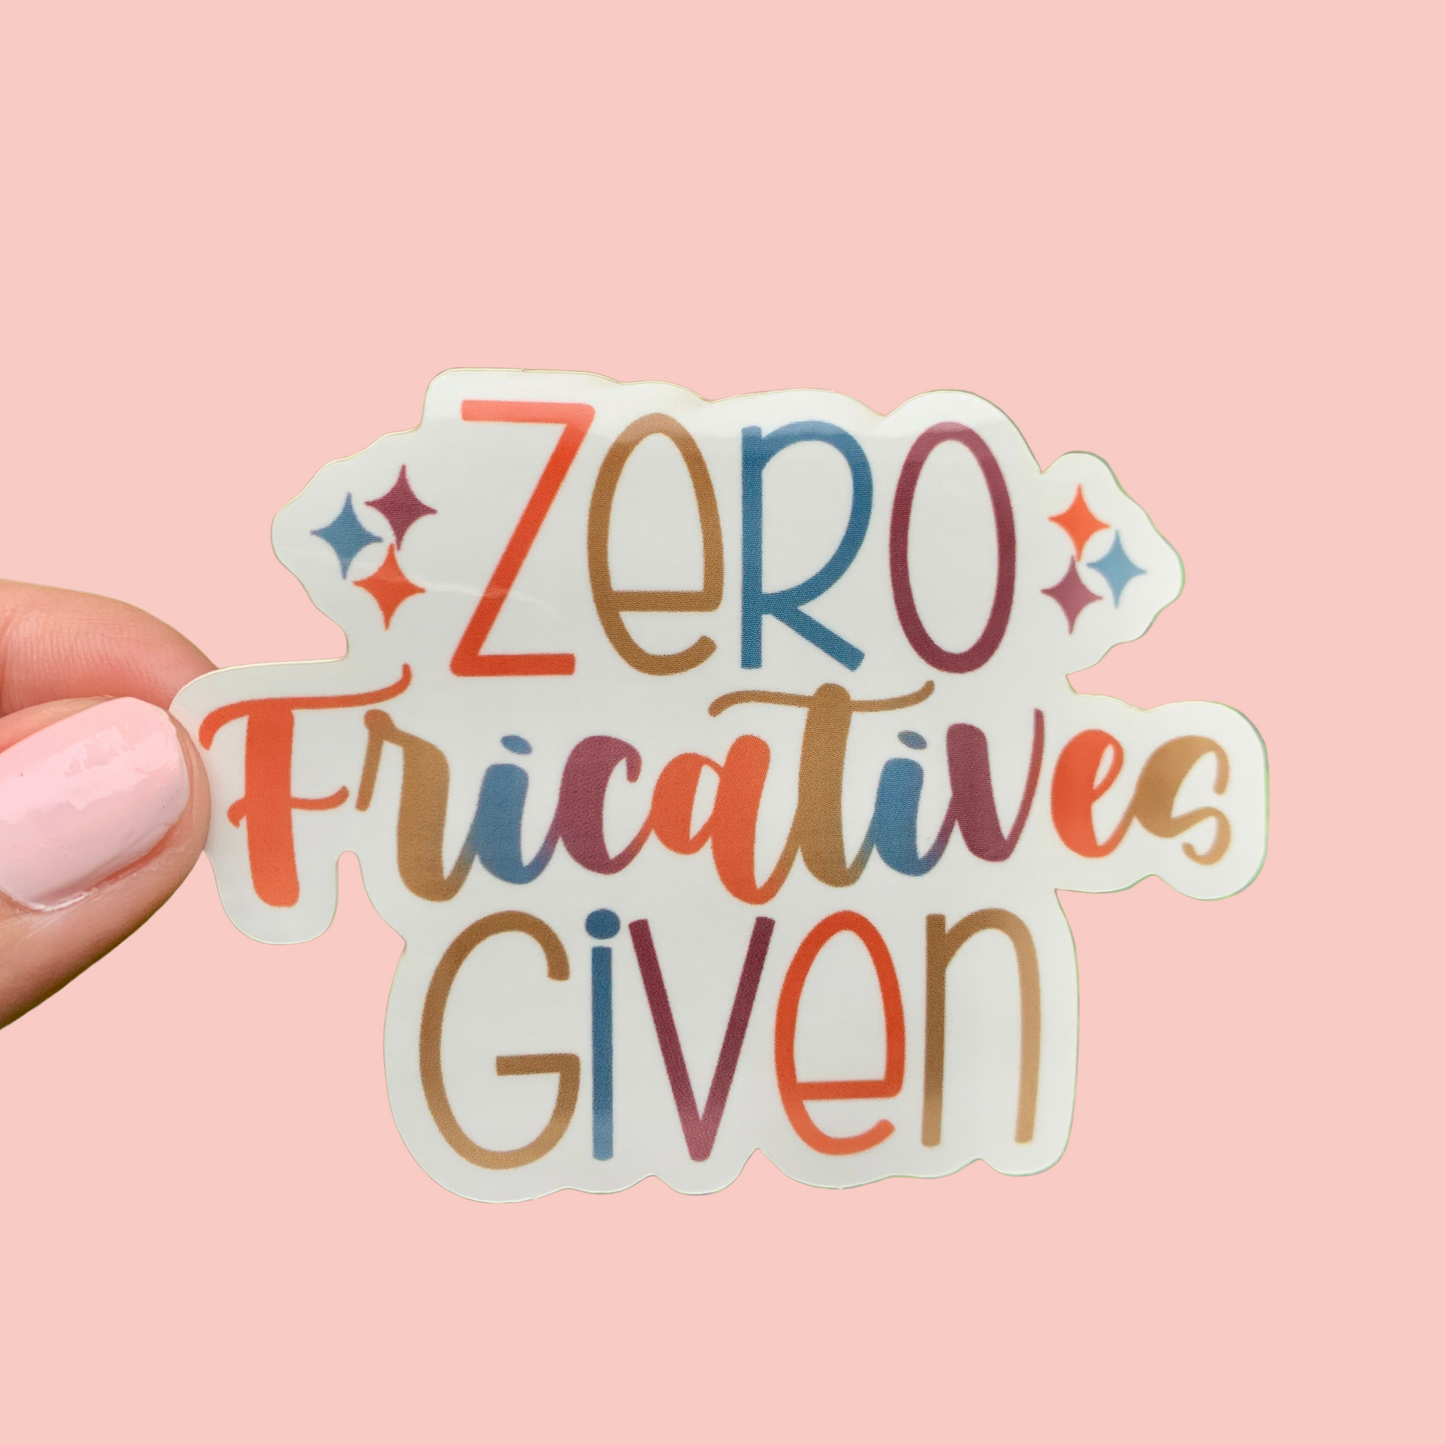 Zero Fricatives Given Sticker